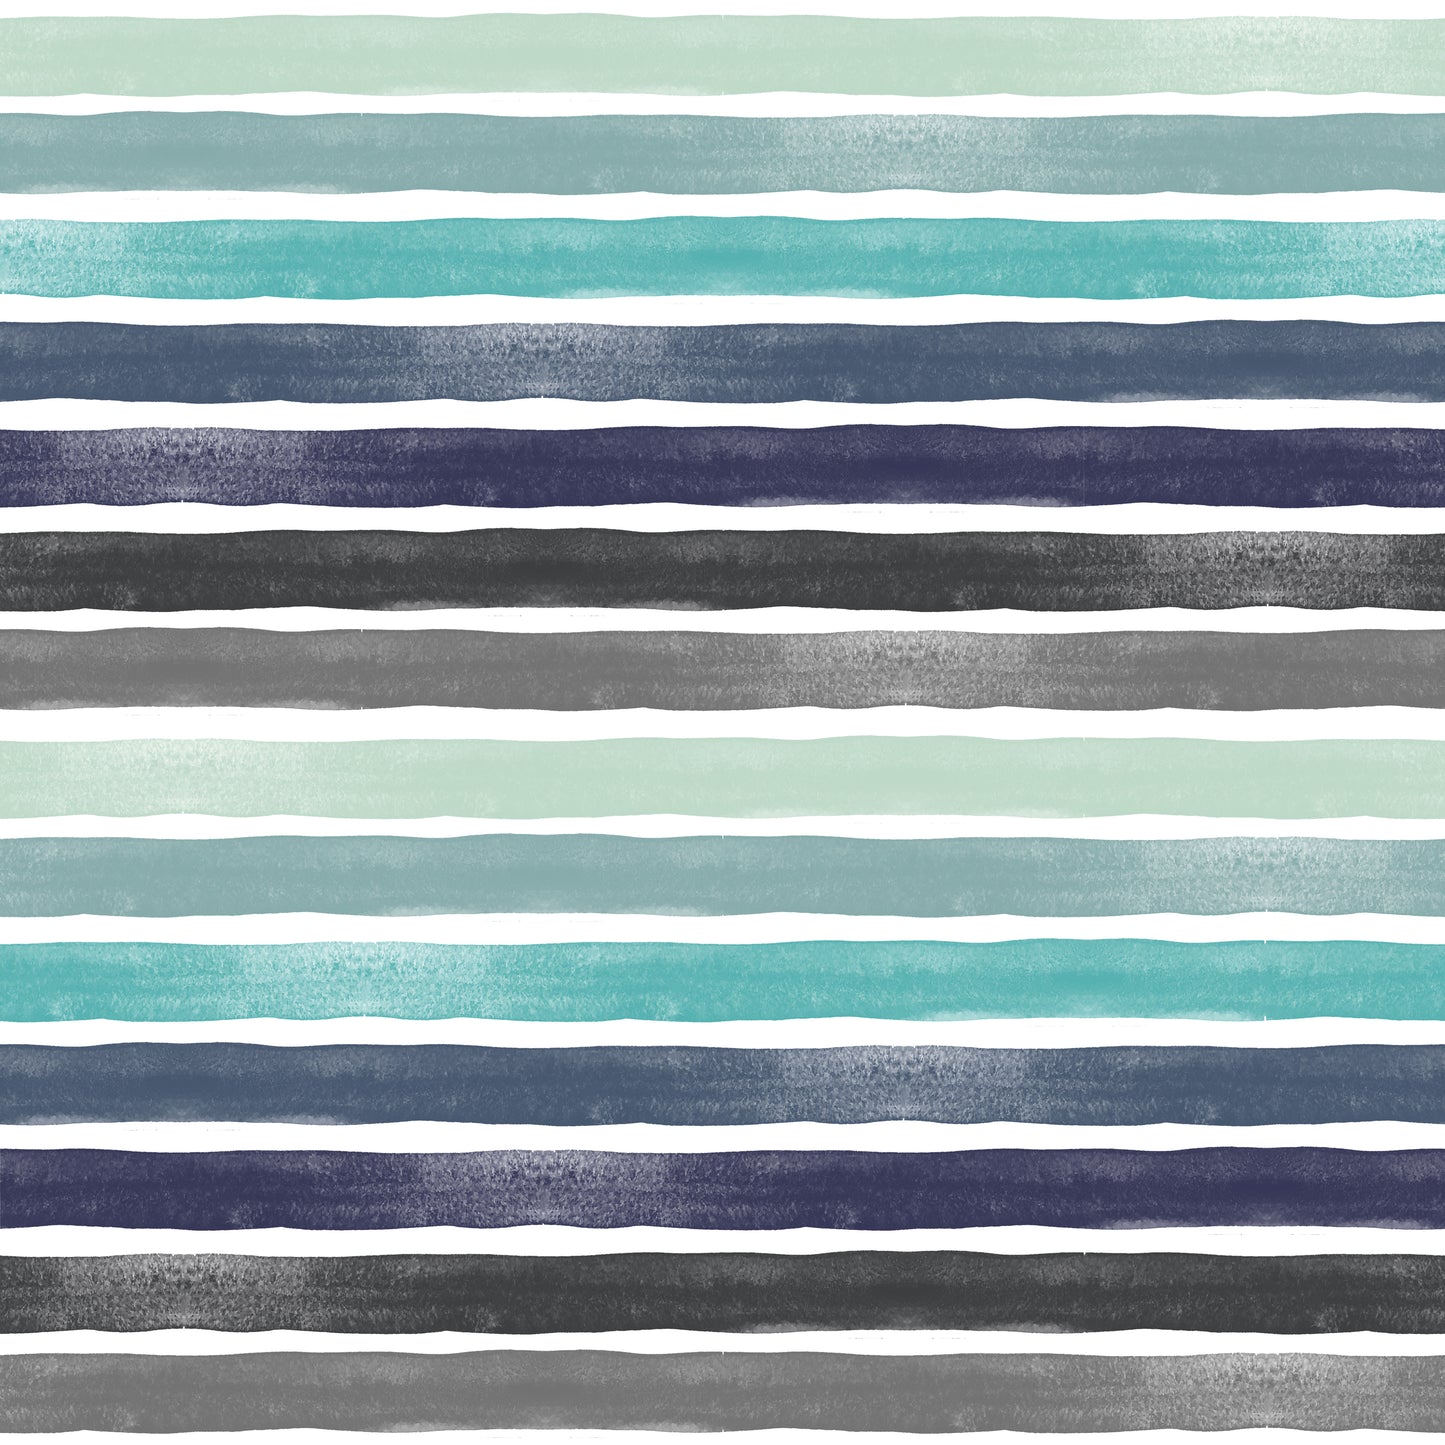 Minky Blanket- Stripes/Plaid